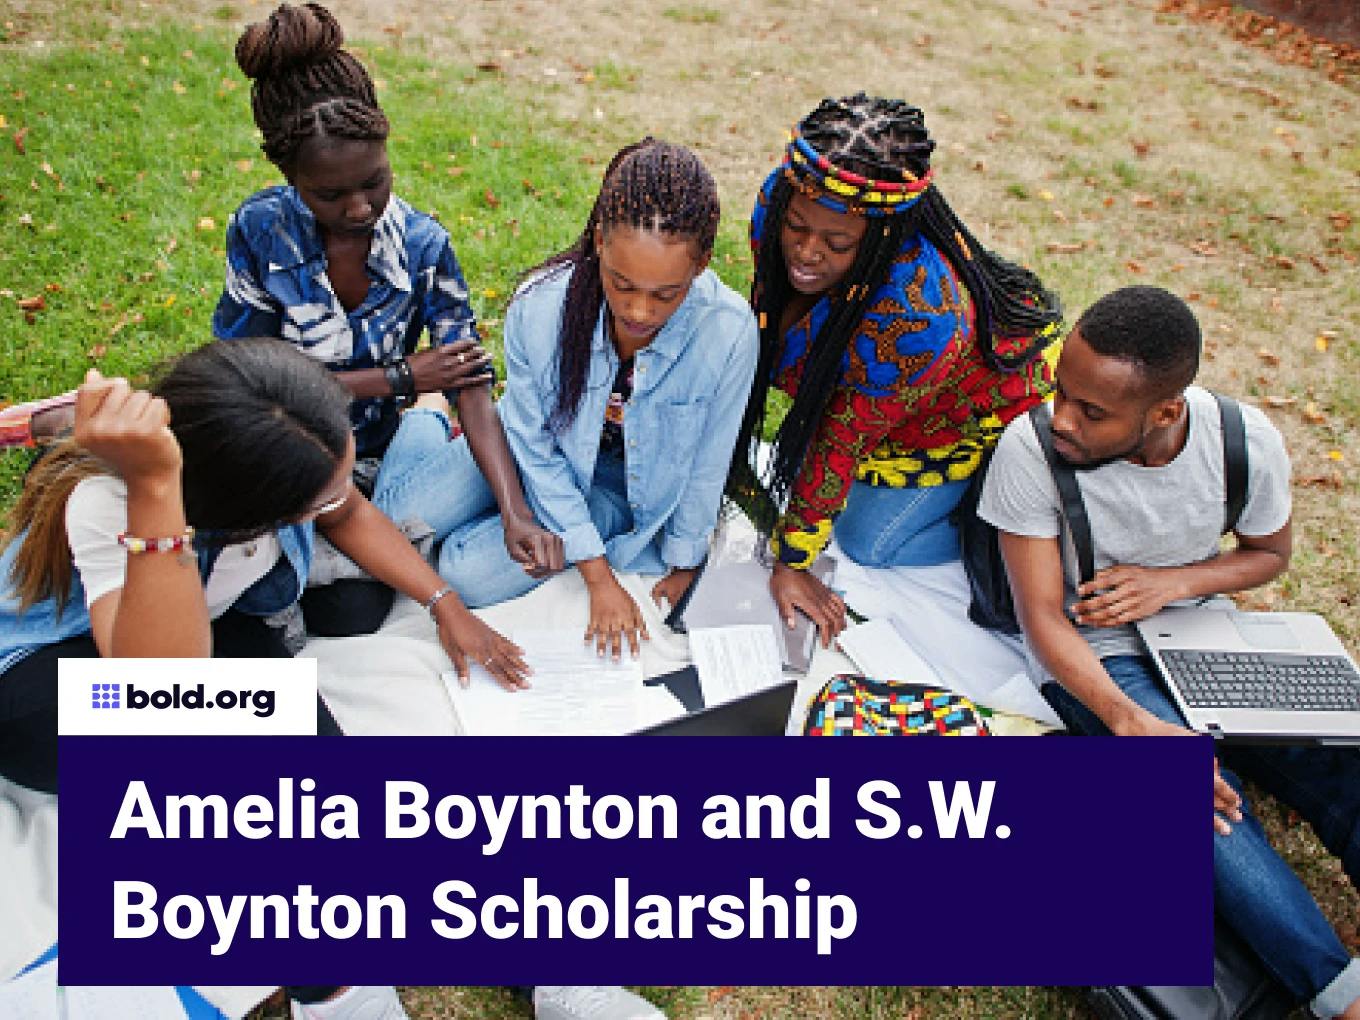 Amelia Boynton and S.W. Boynton Scholarship